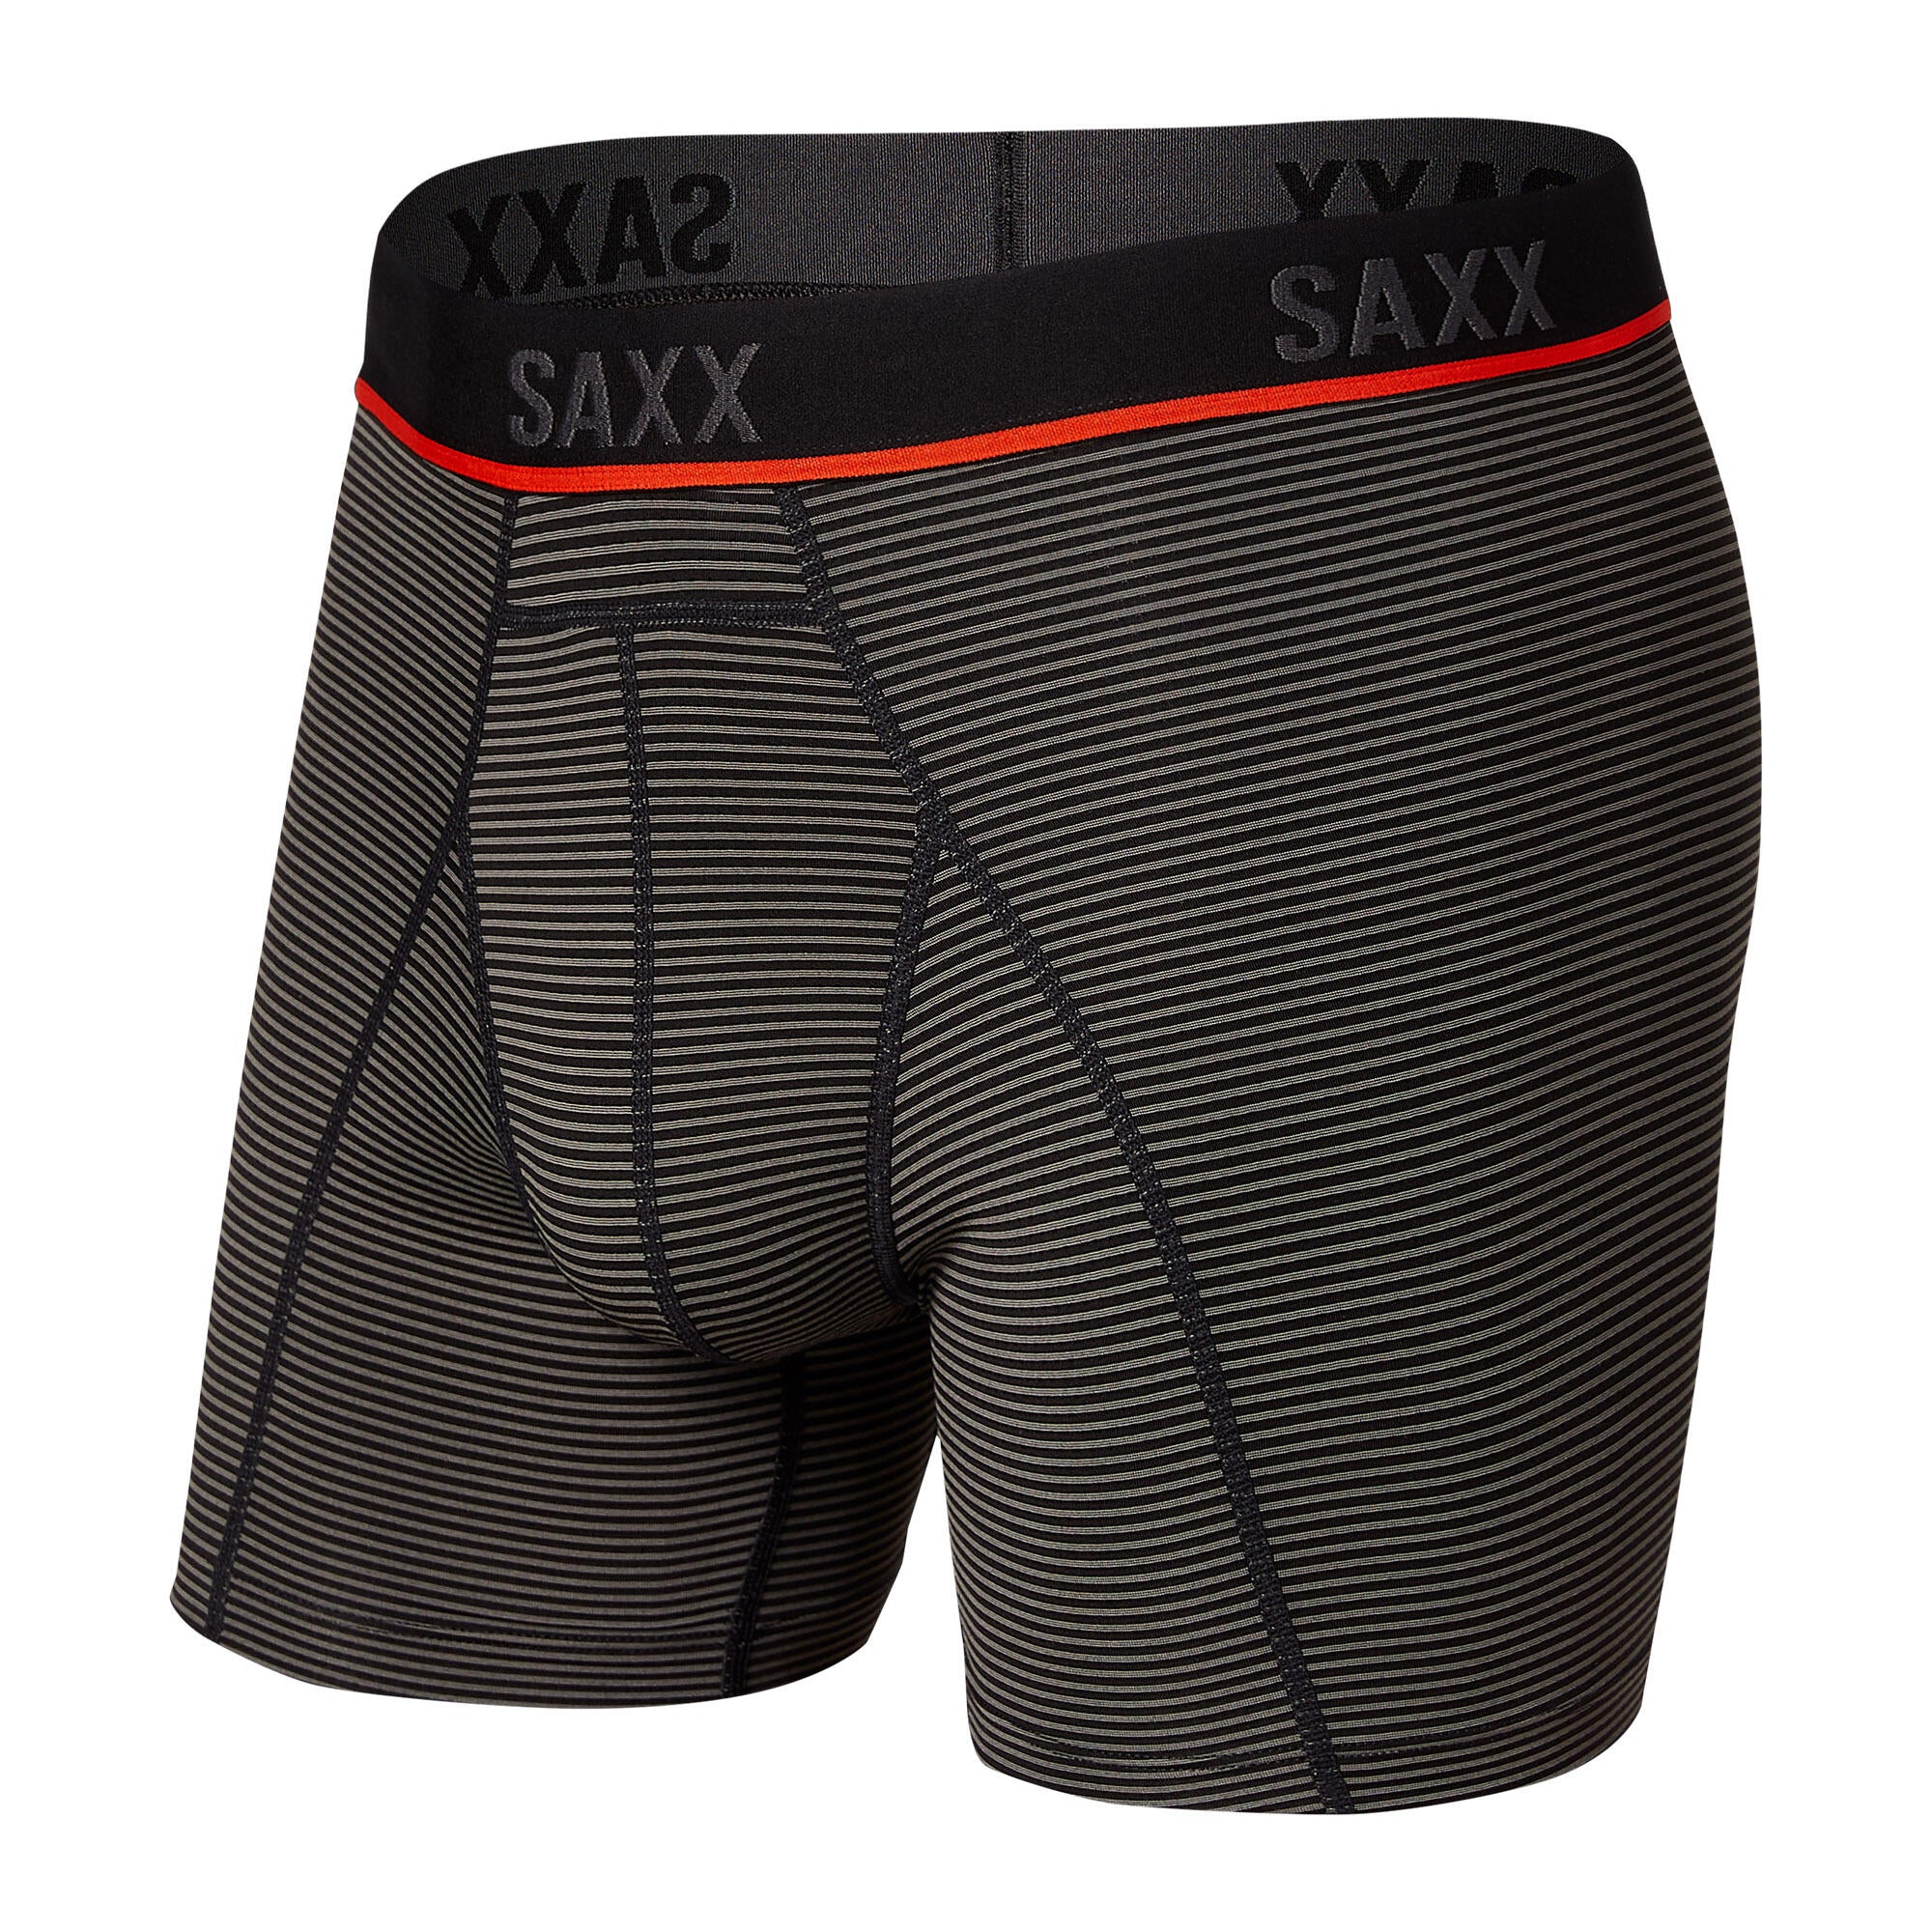 SAXX Volt 2 Pack Stretch Boxer Briefs - Men's Boxers in Flamingo